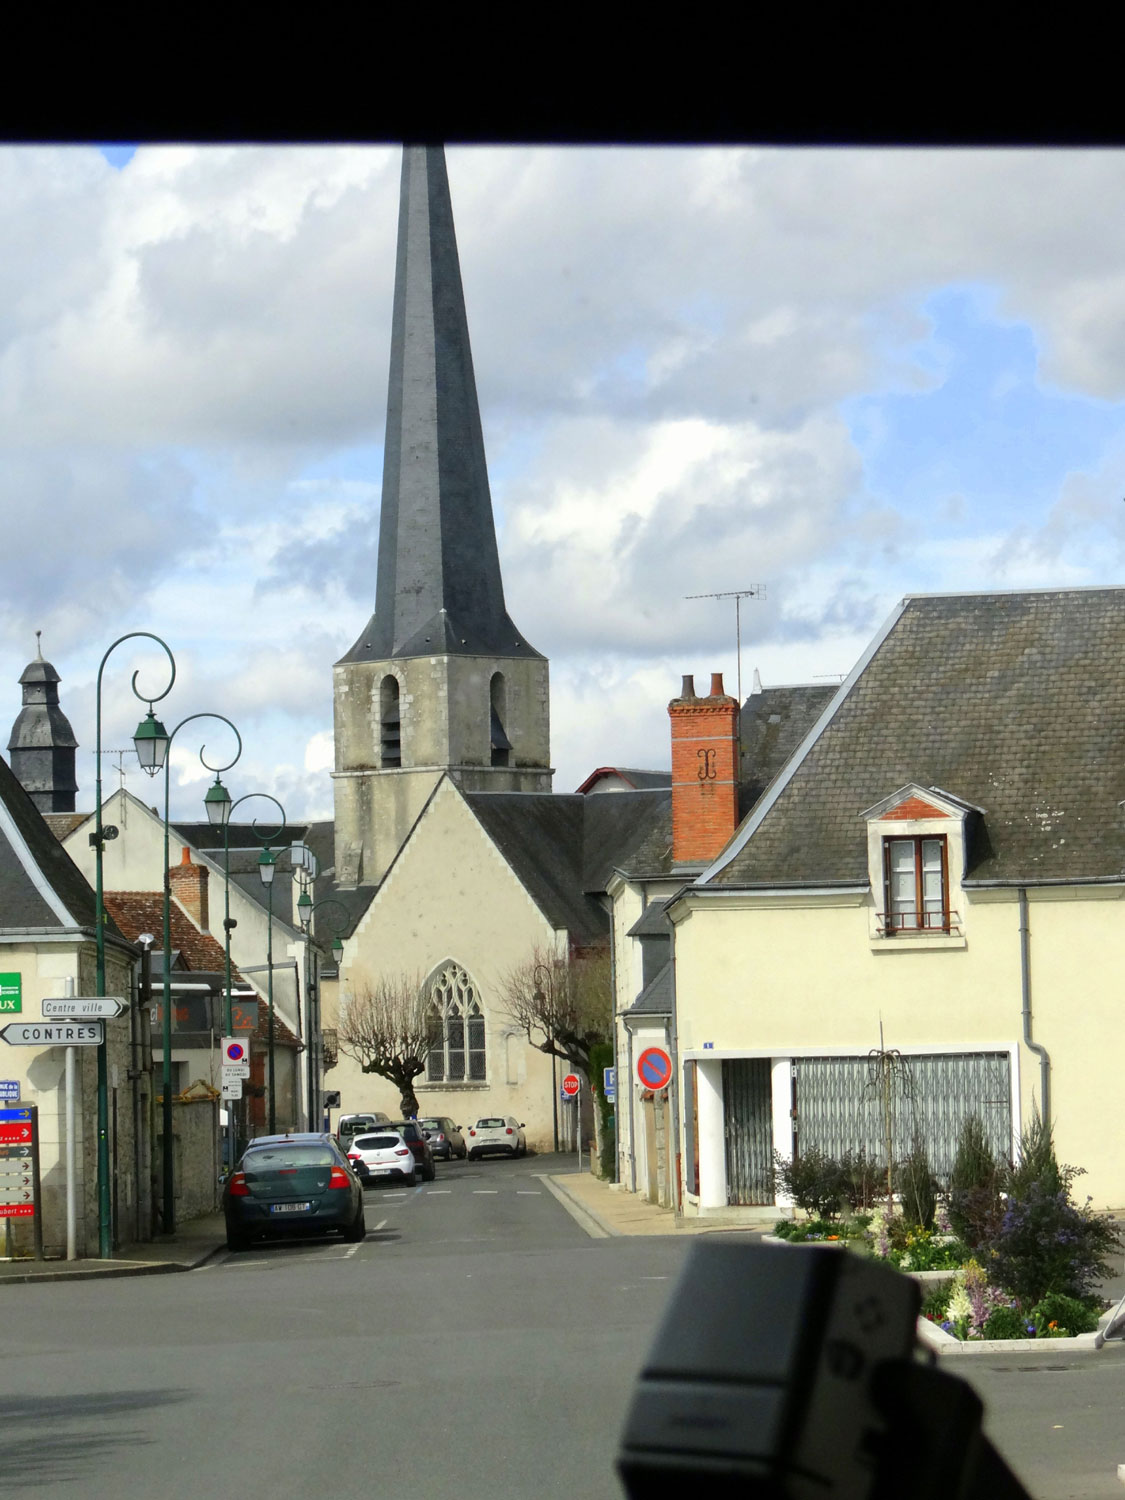 Vale do Loire